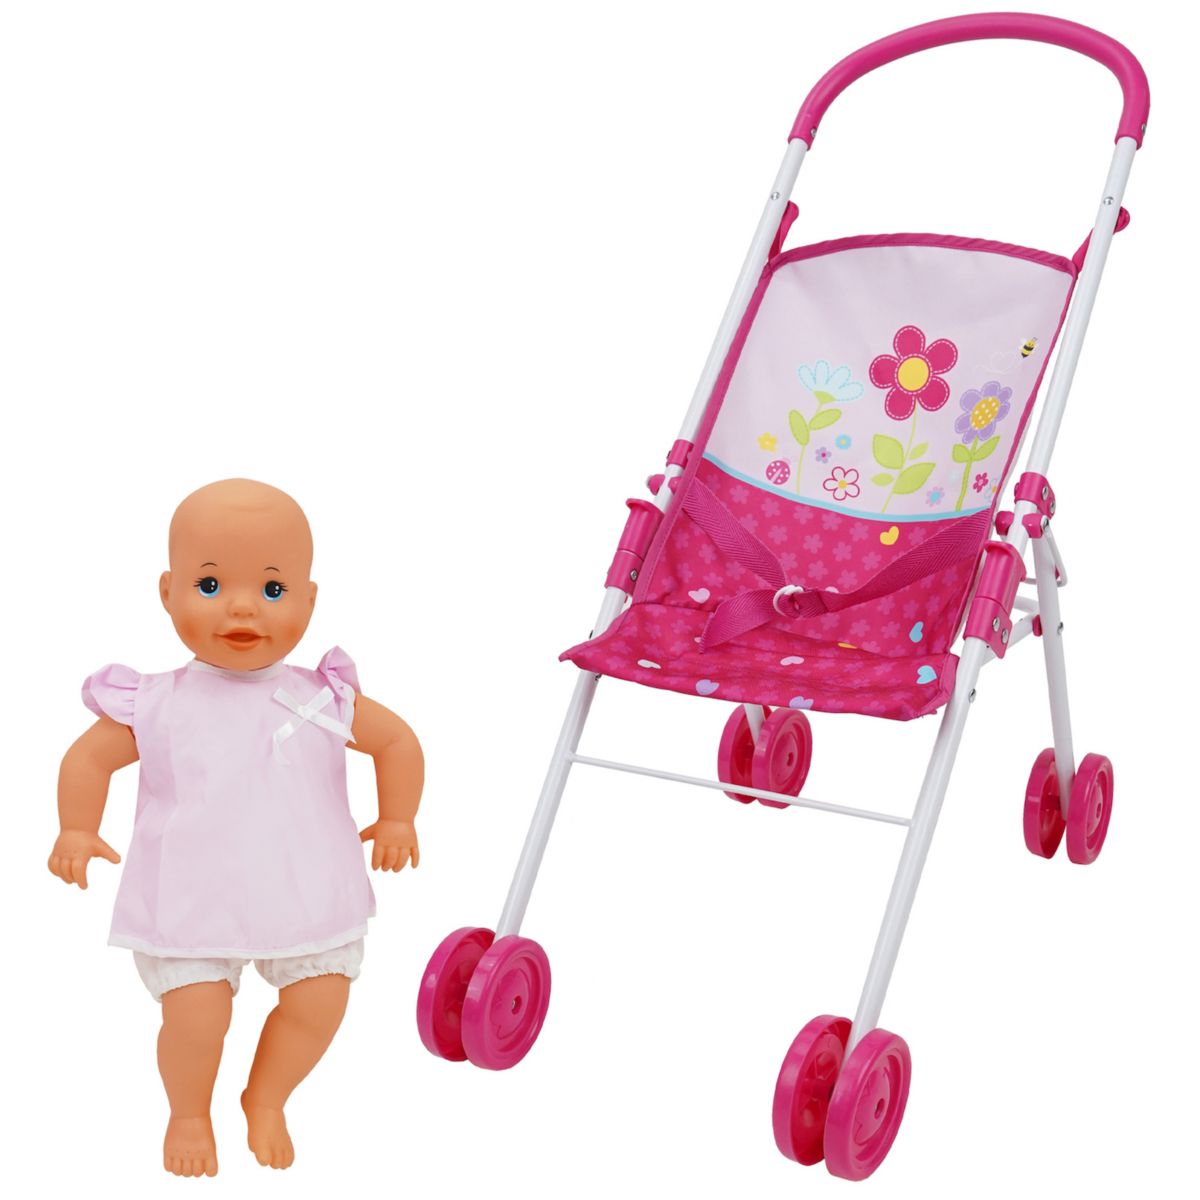 509 Crew Garden Stroll N Doll Set - 14#34; Детская кукла и складная коляска 509 Crew